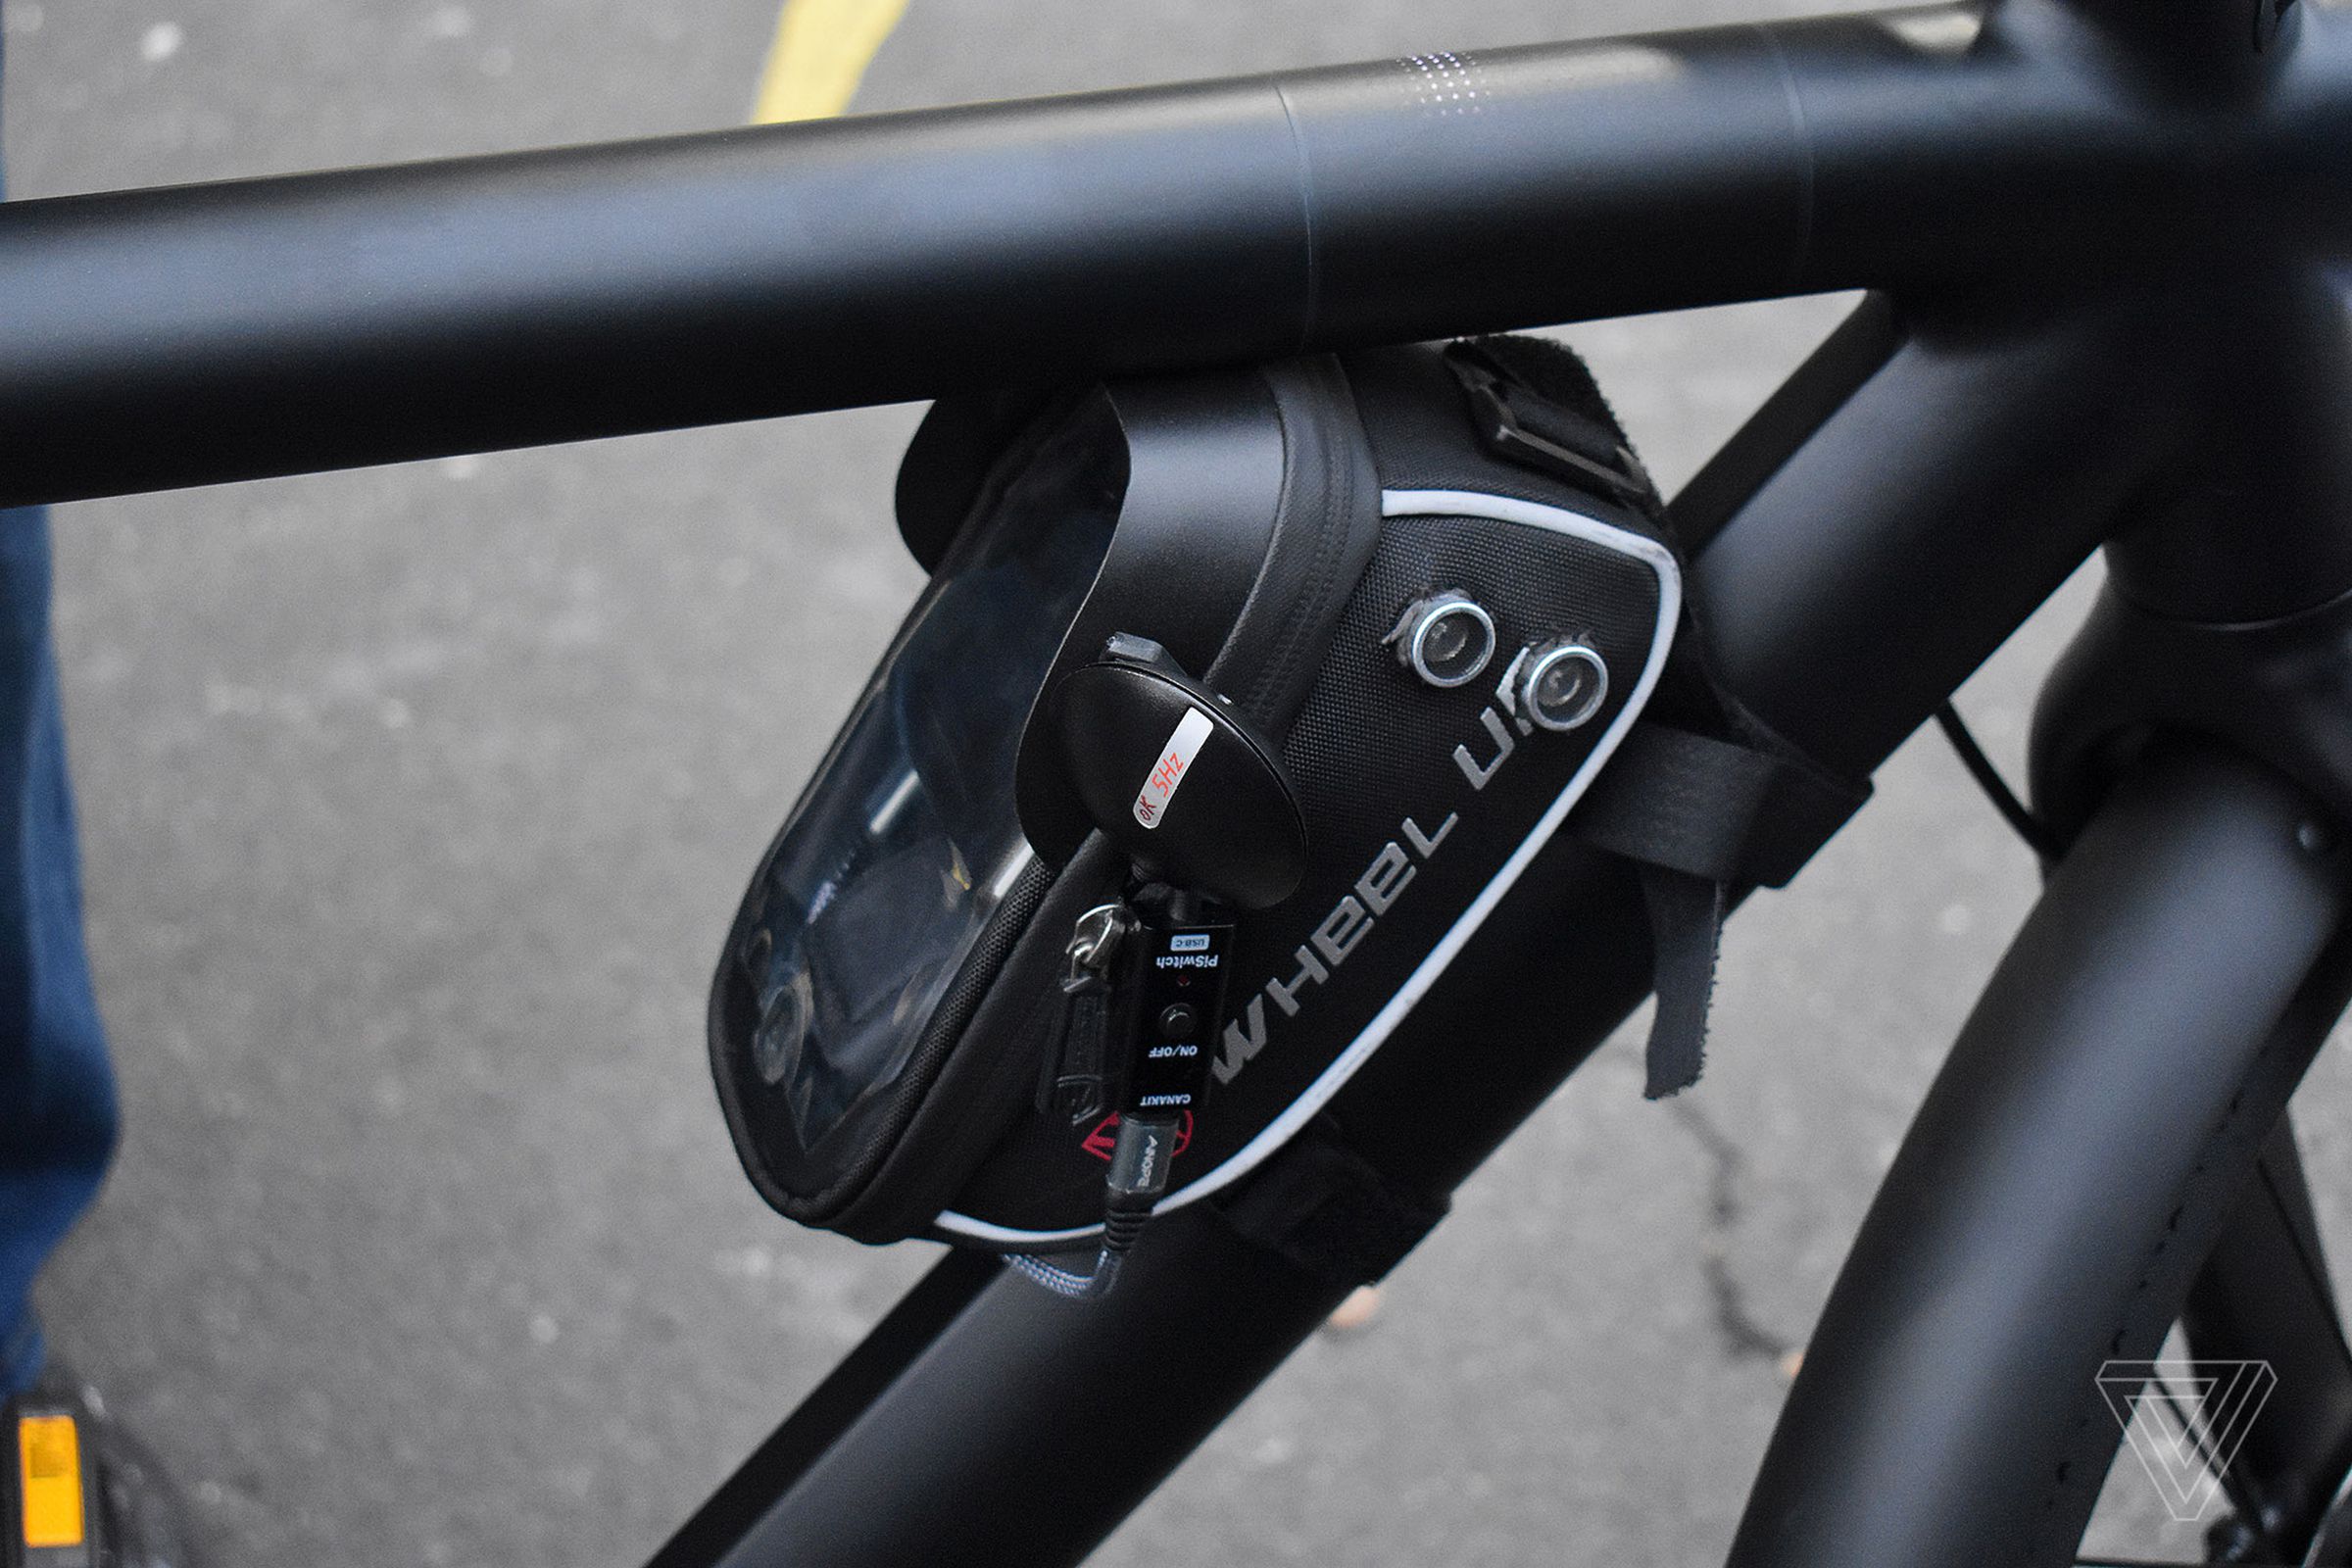 A sensor used by NYU researchers to gather data about bike usage. 